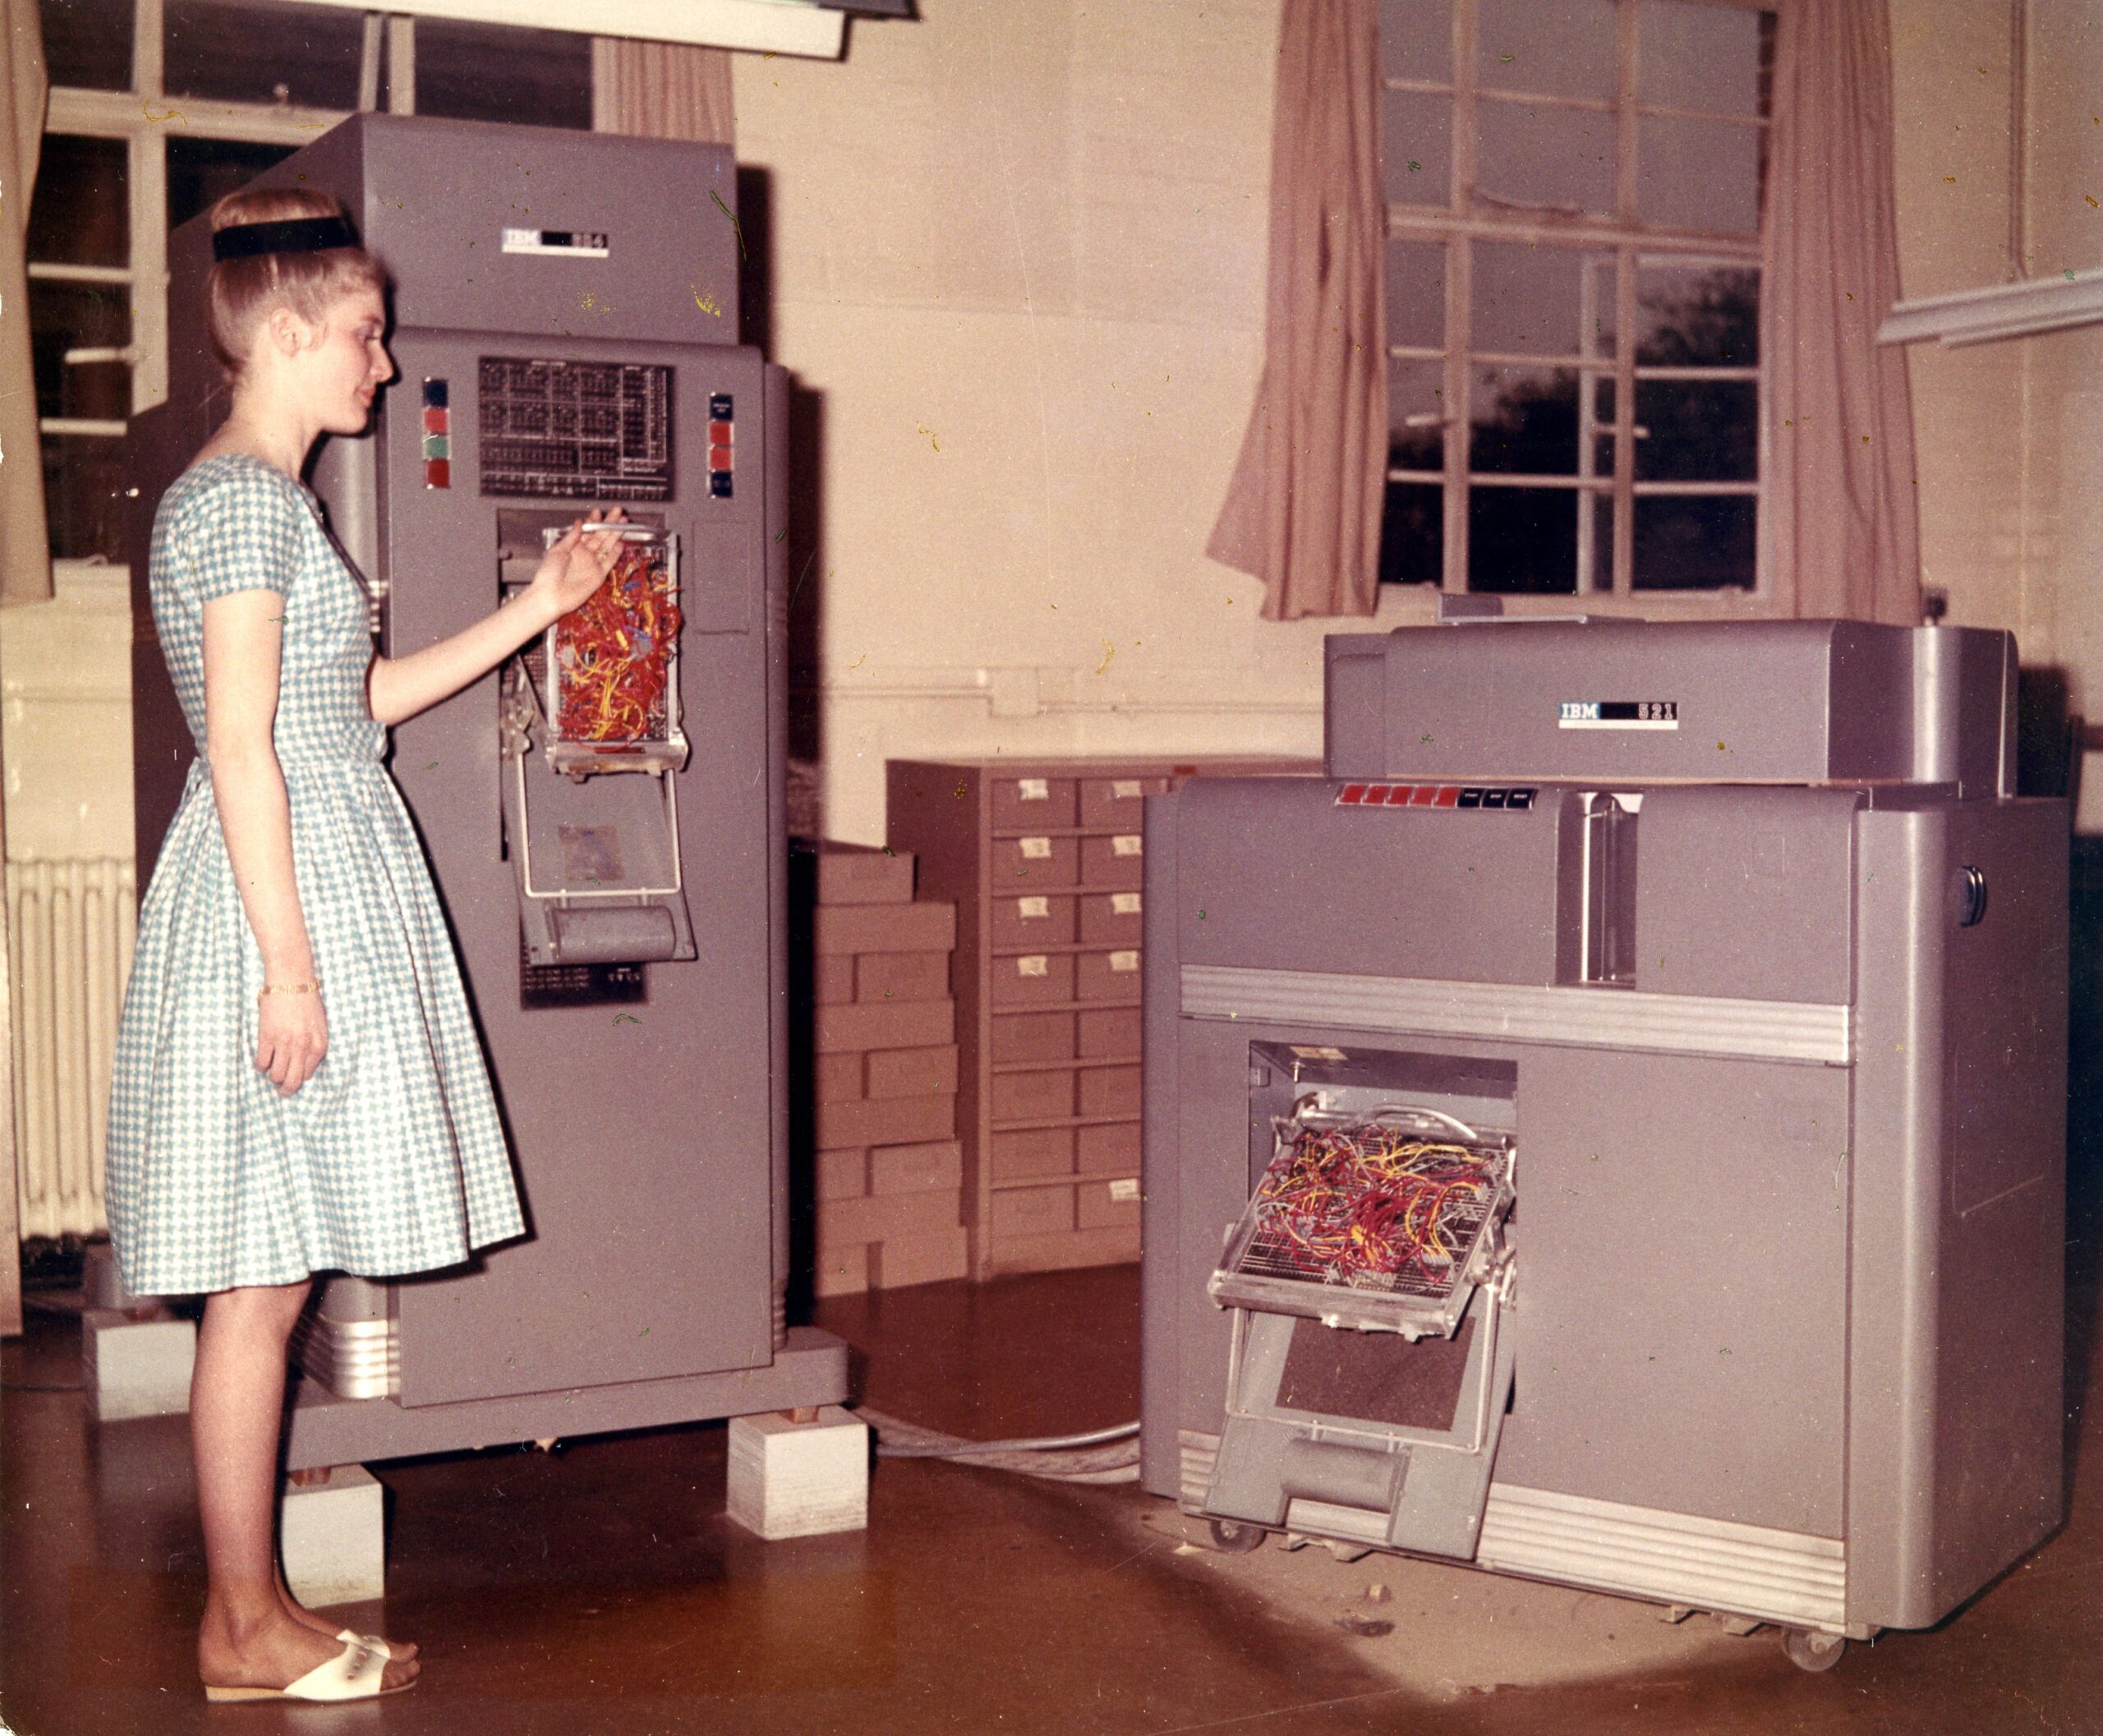 IBM 604 and 521 computation equipment at Chessington